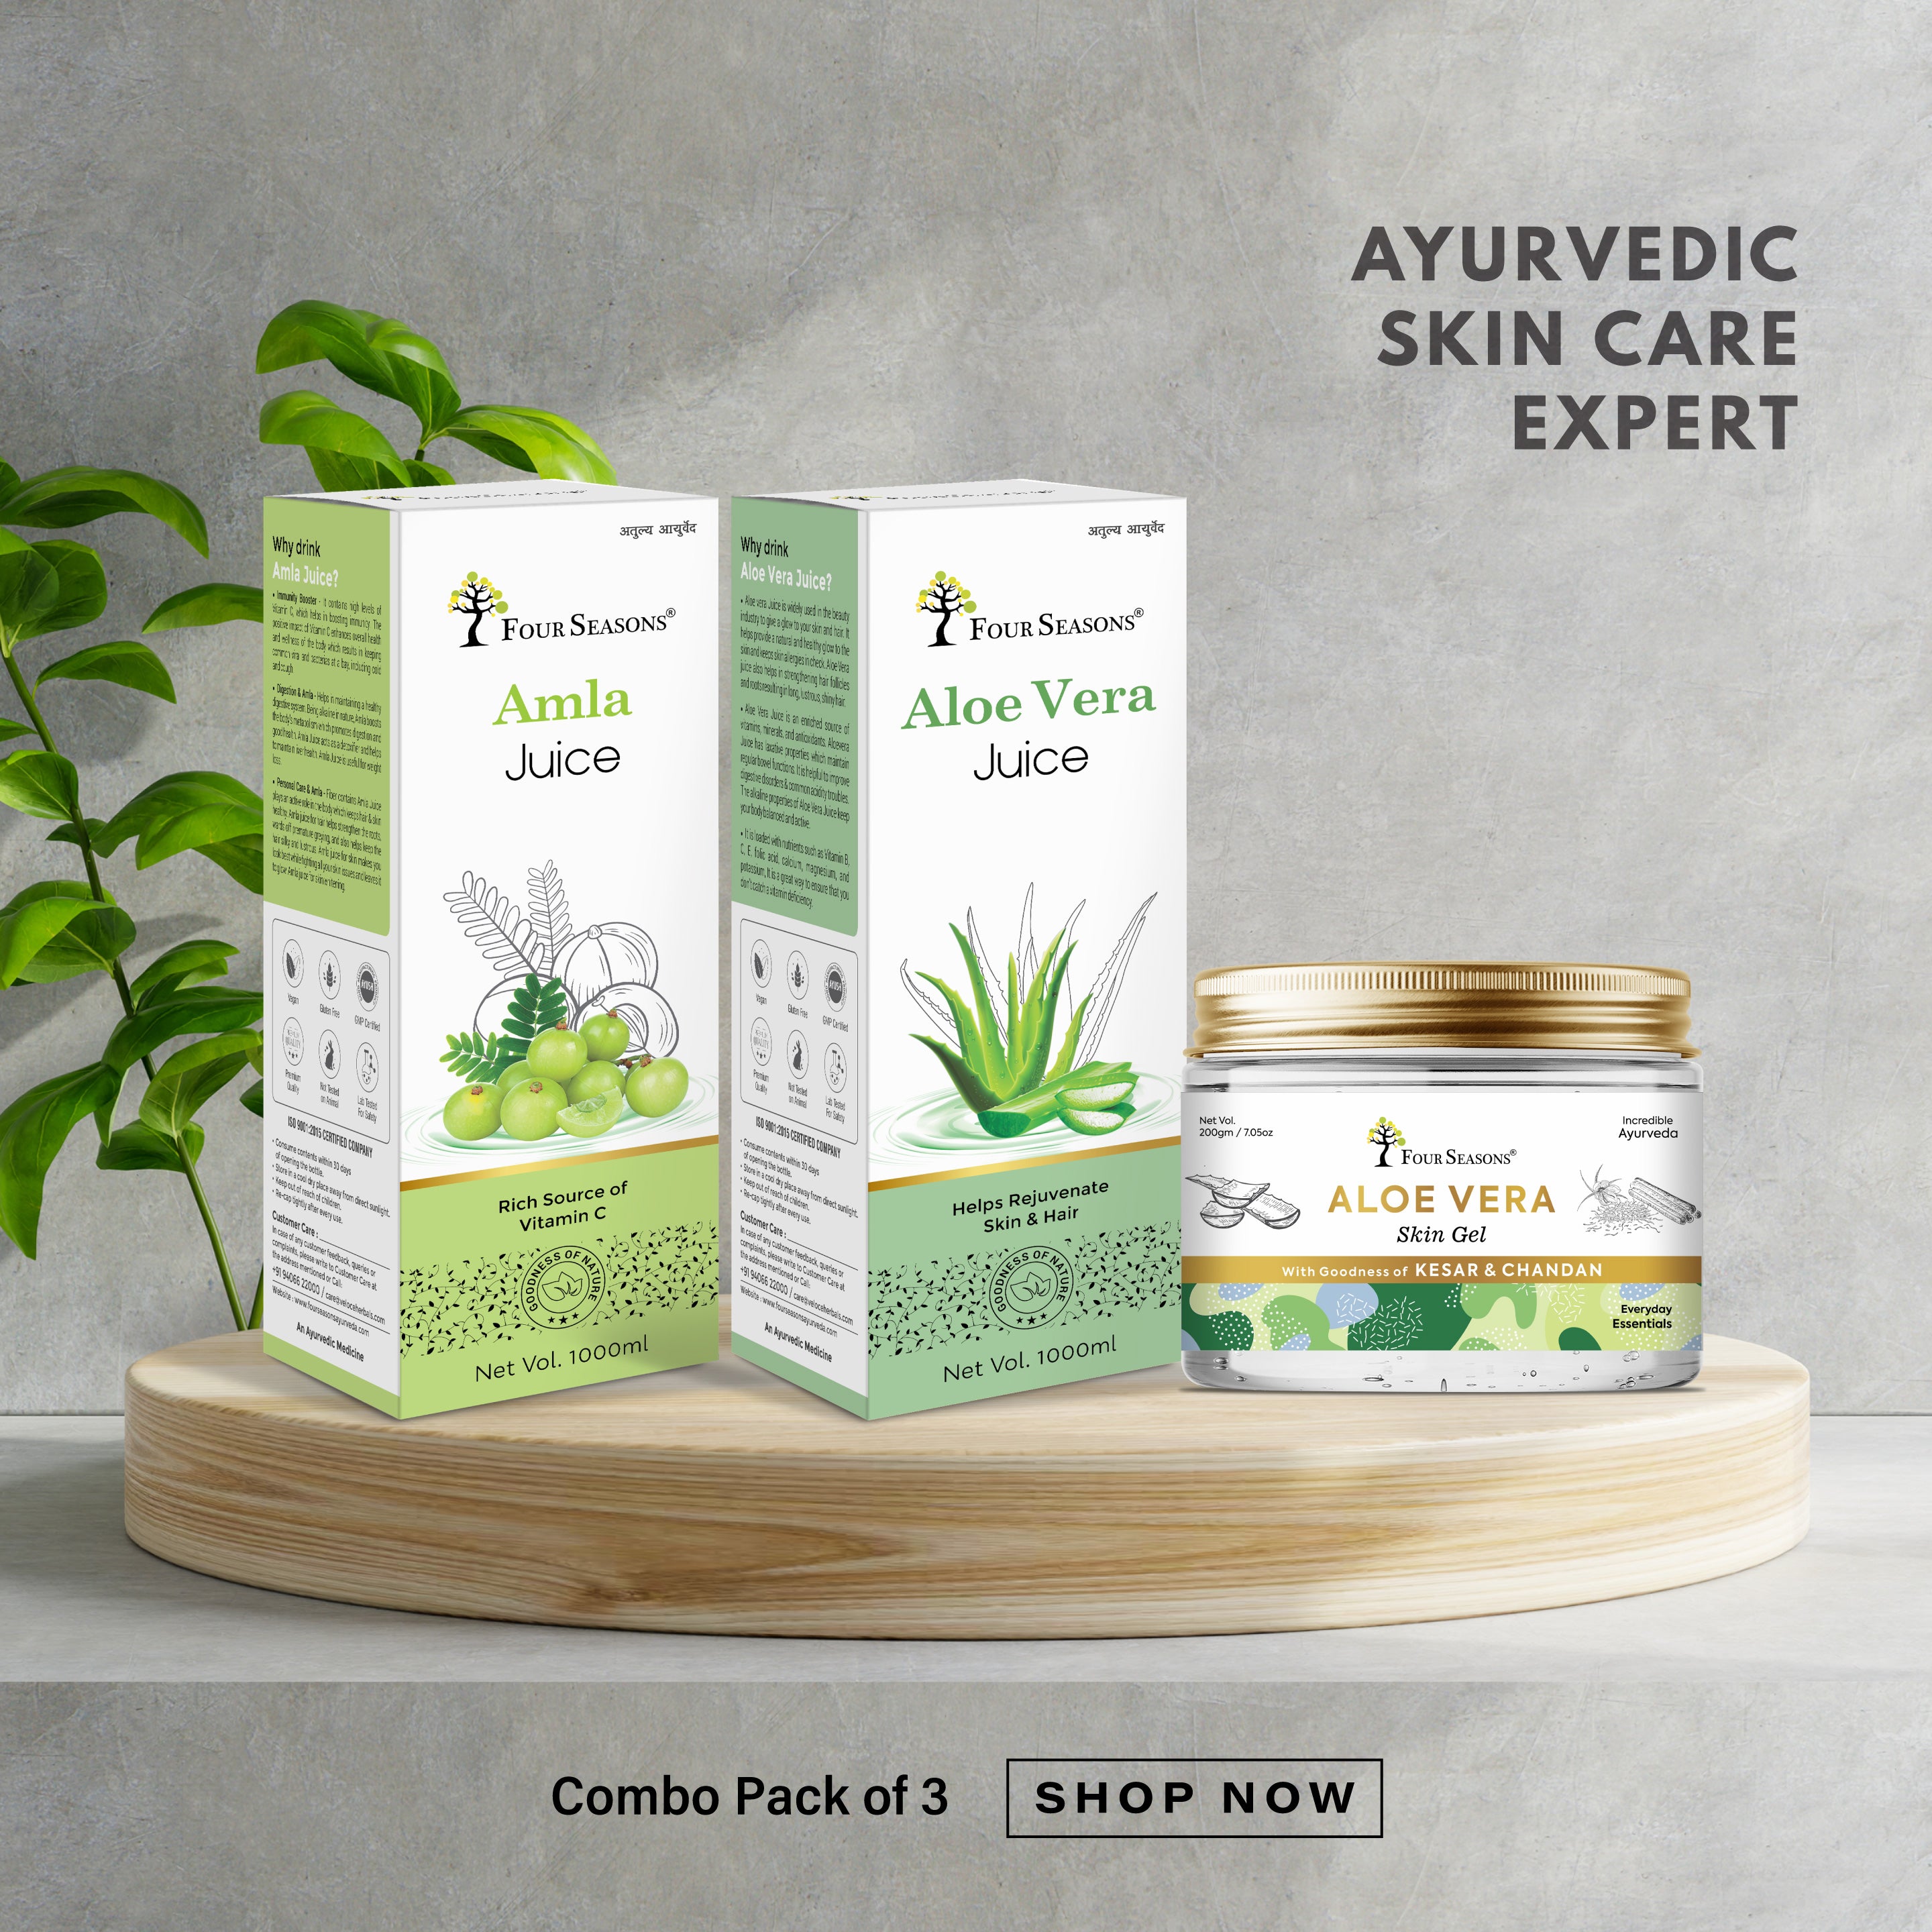 Ayurvedic Skin Care Expert